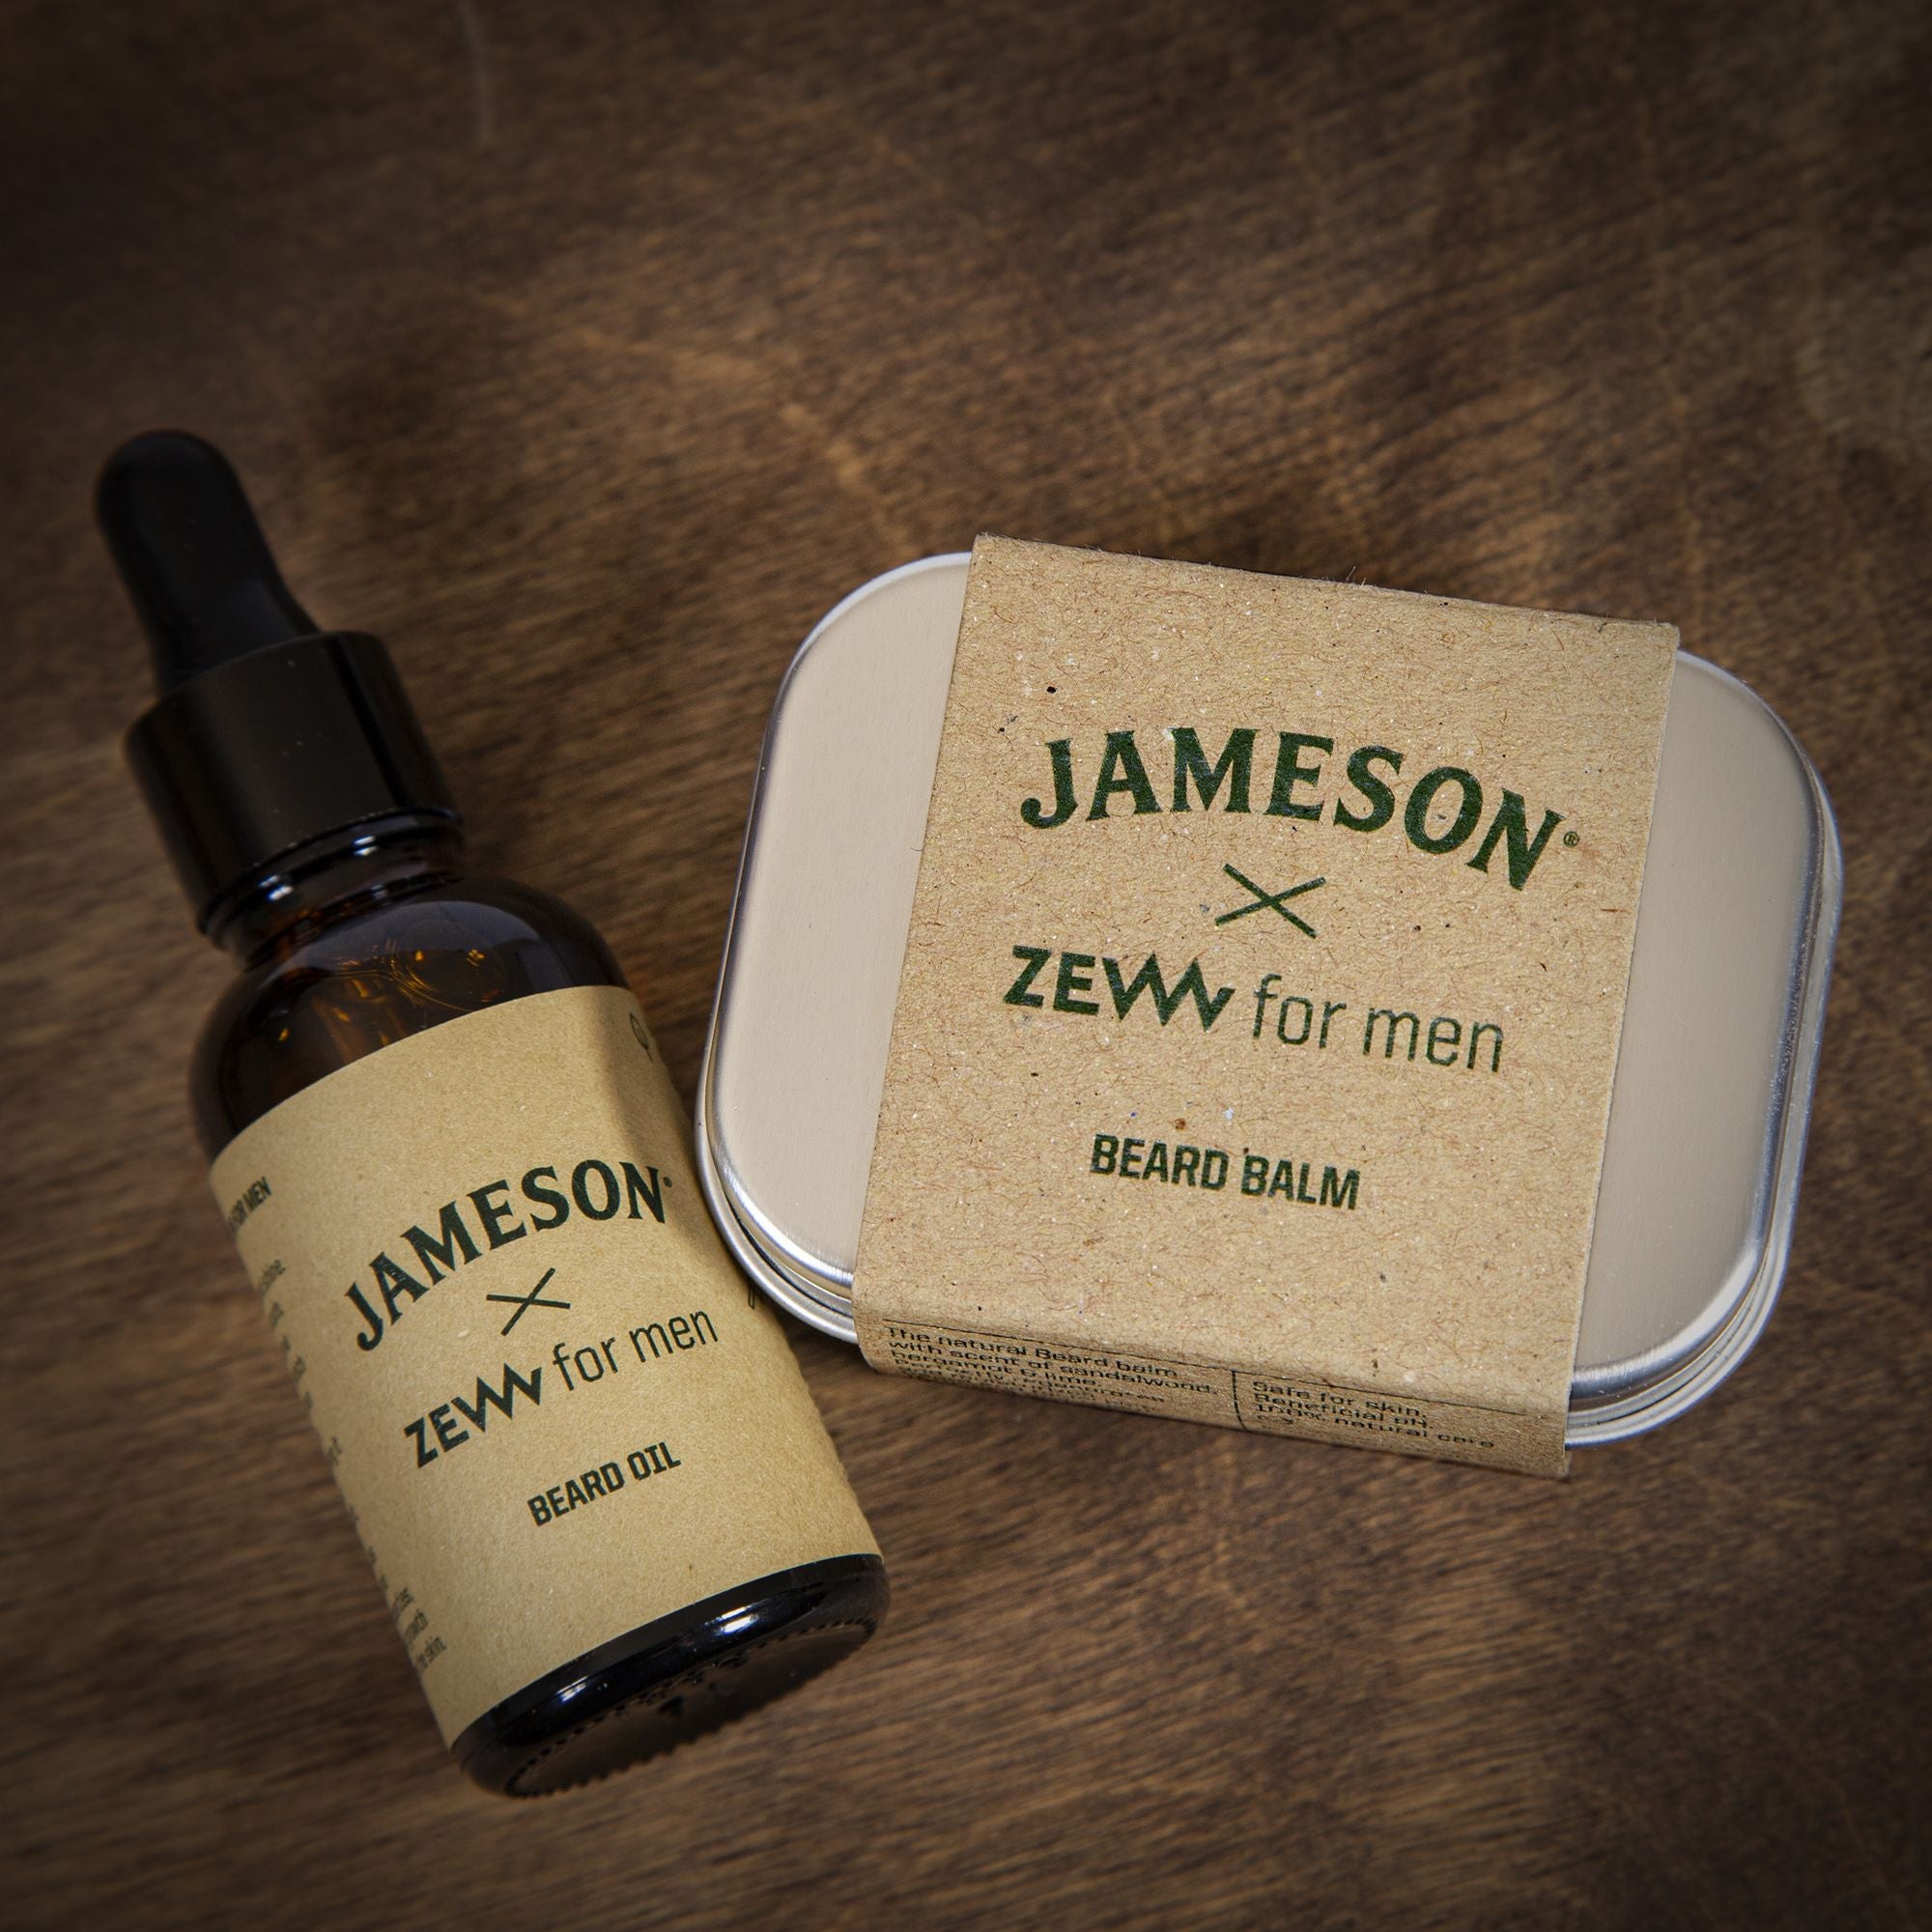 Beard Balm Jameson x ZEW for Men 80ml